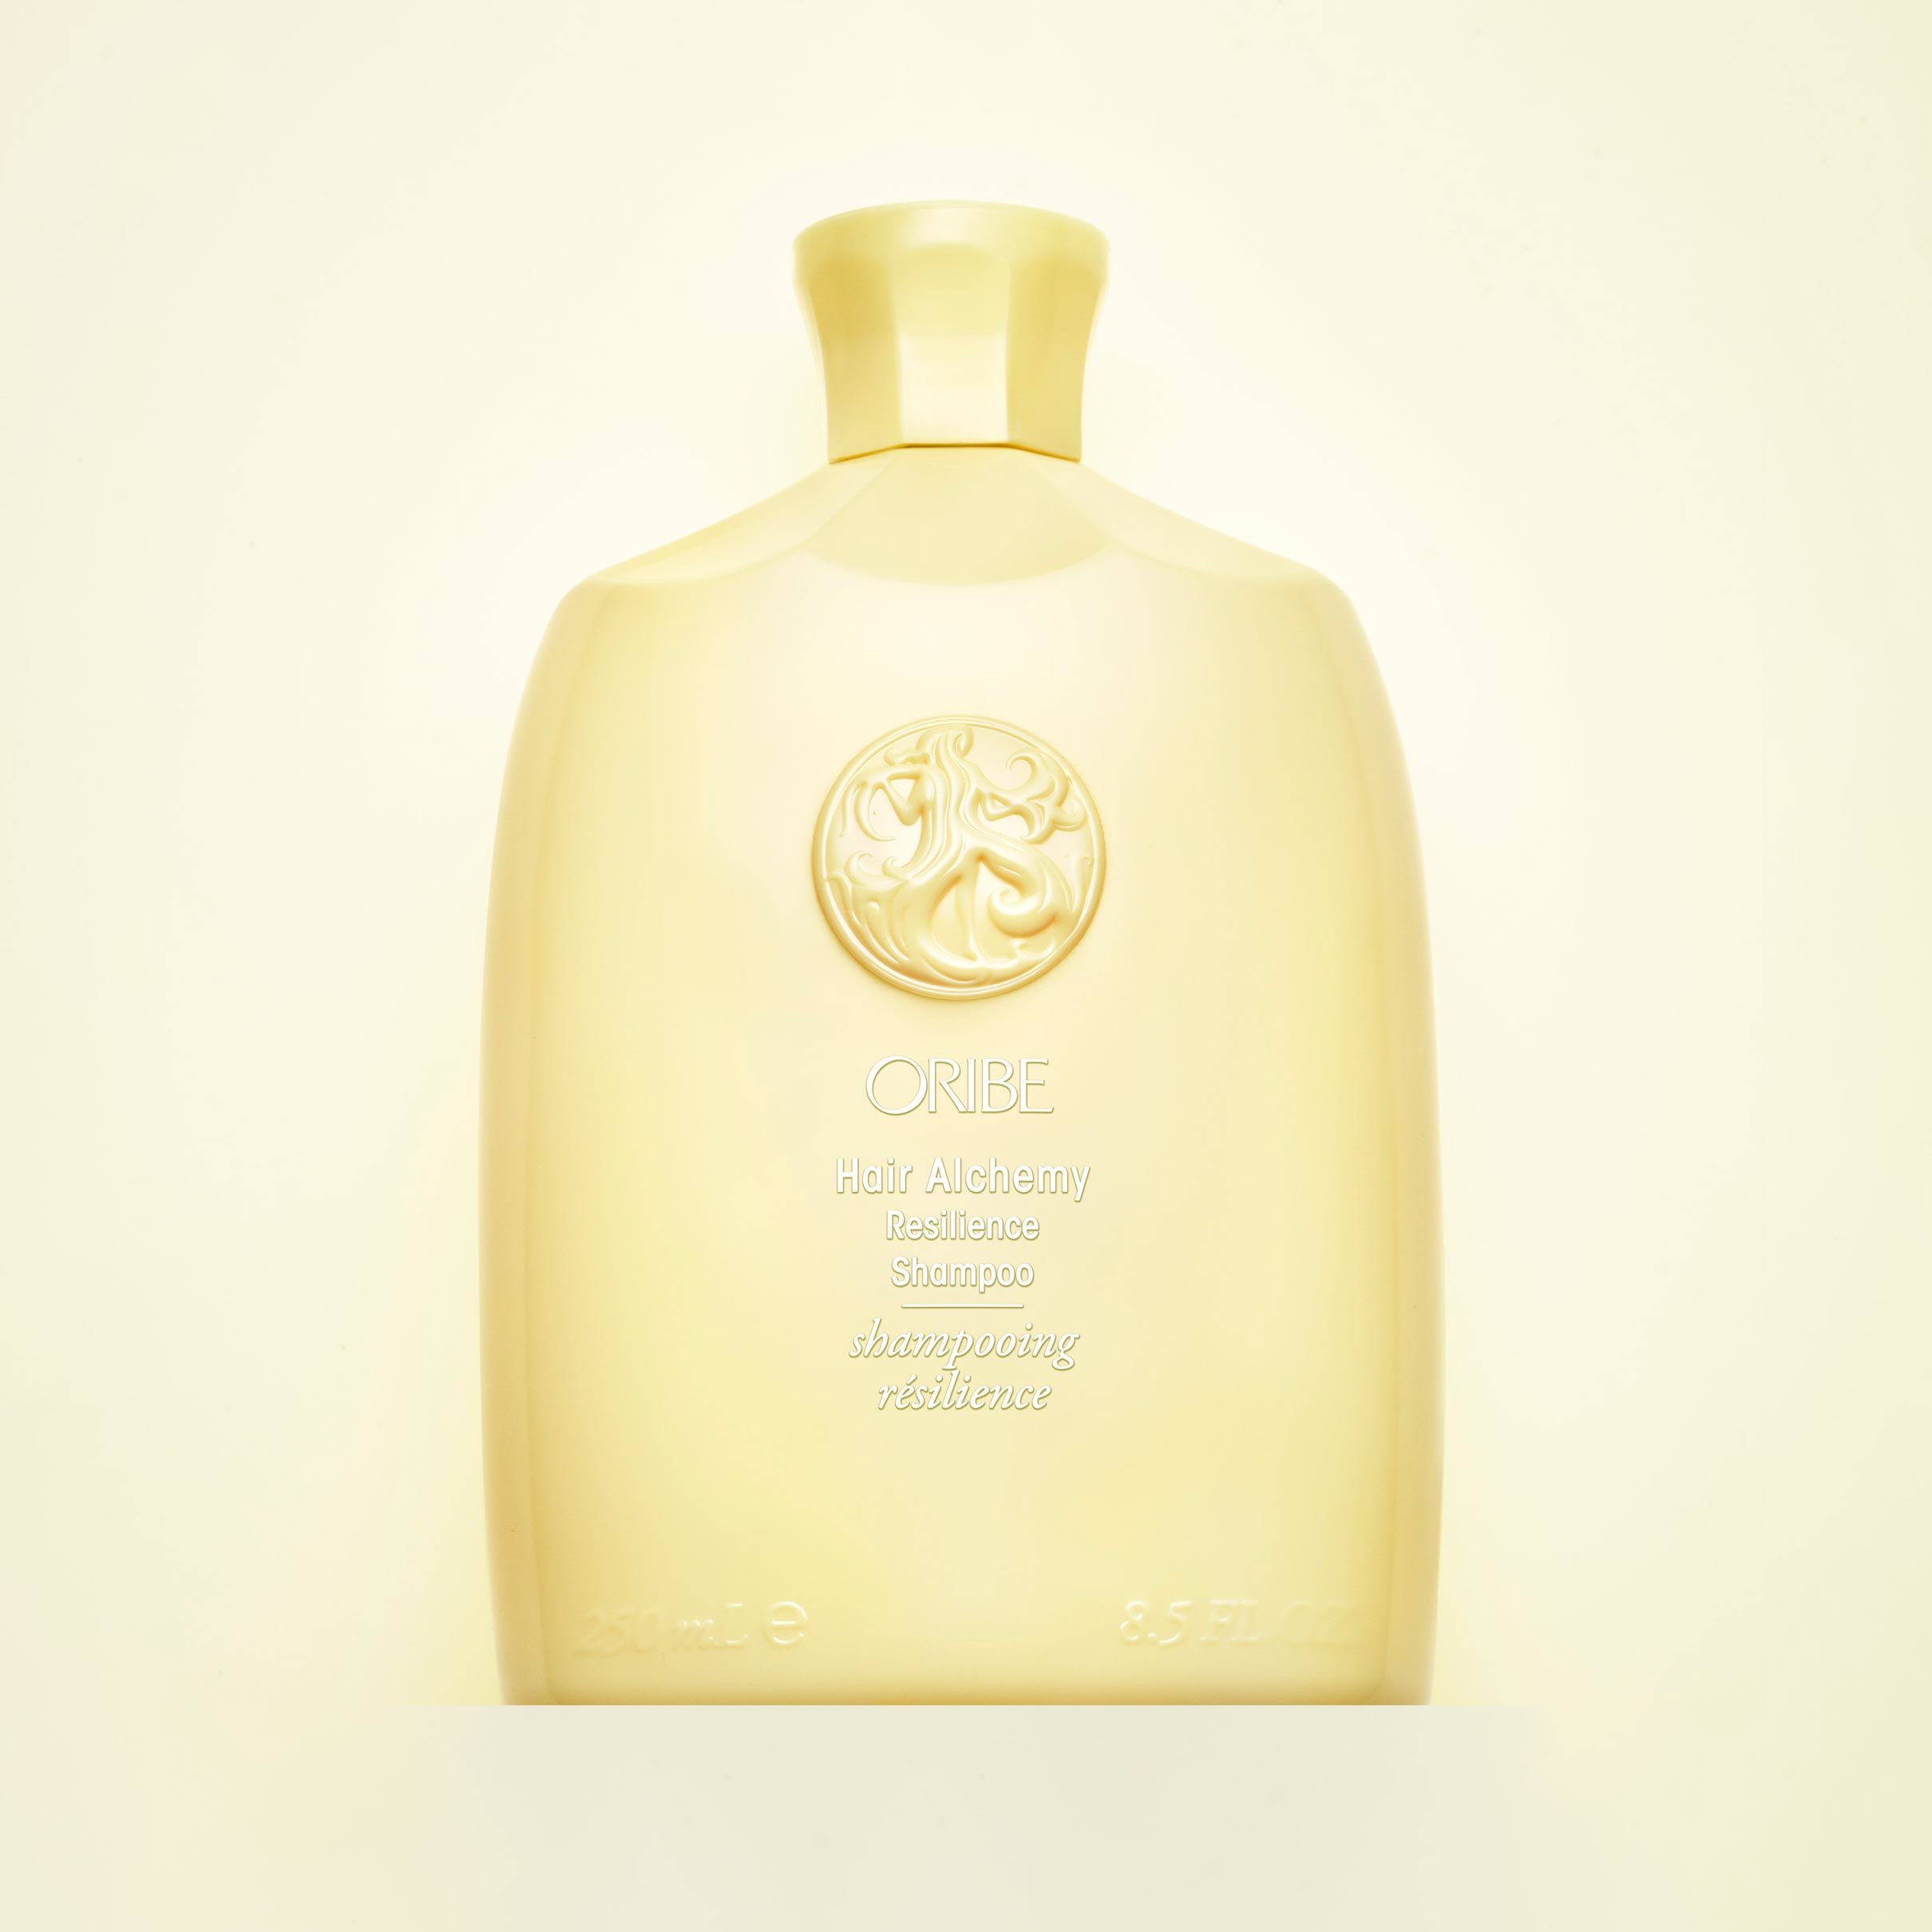 Shop Oribe's Hair Alchemy Resilience Shampoo on Beautylish.com